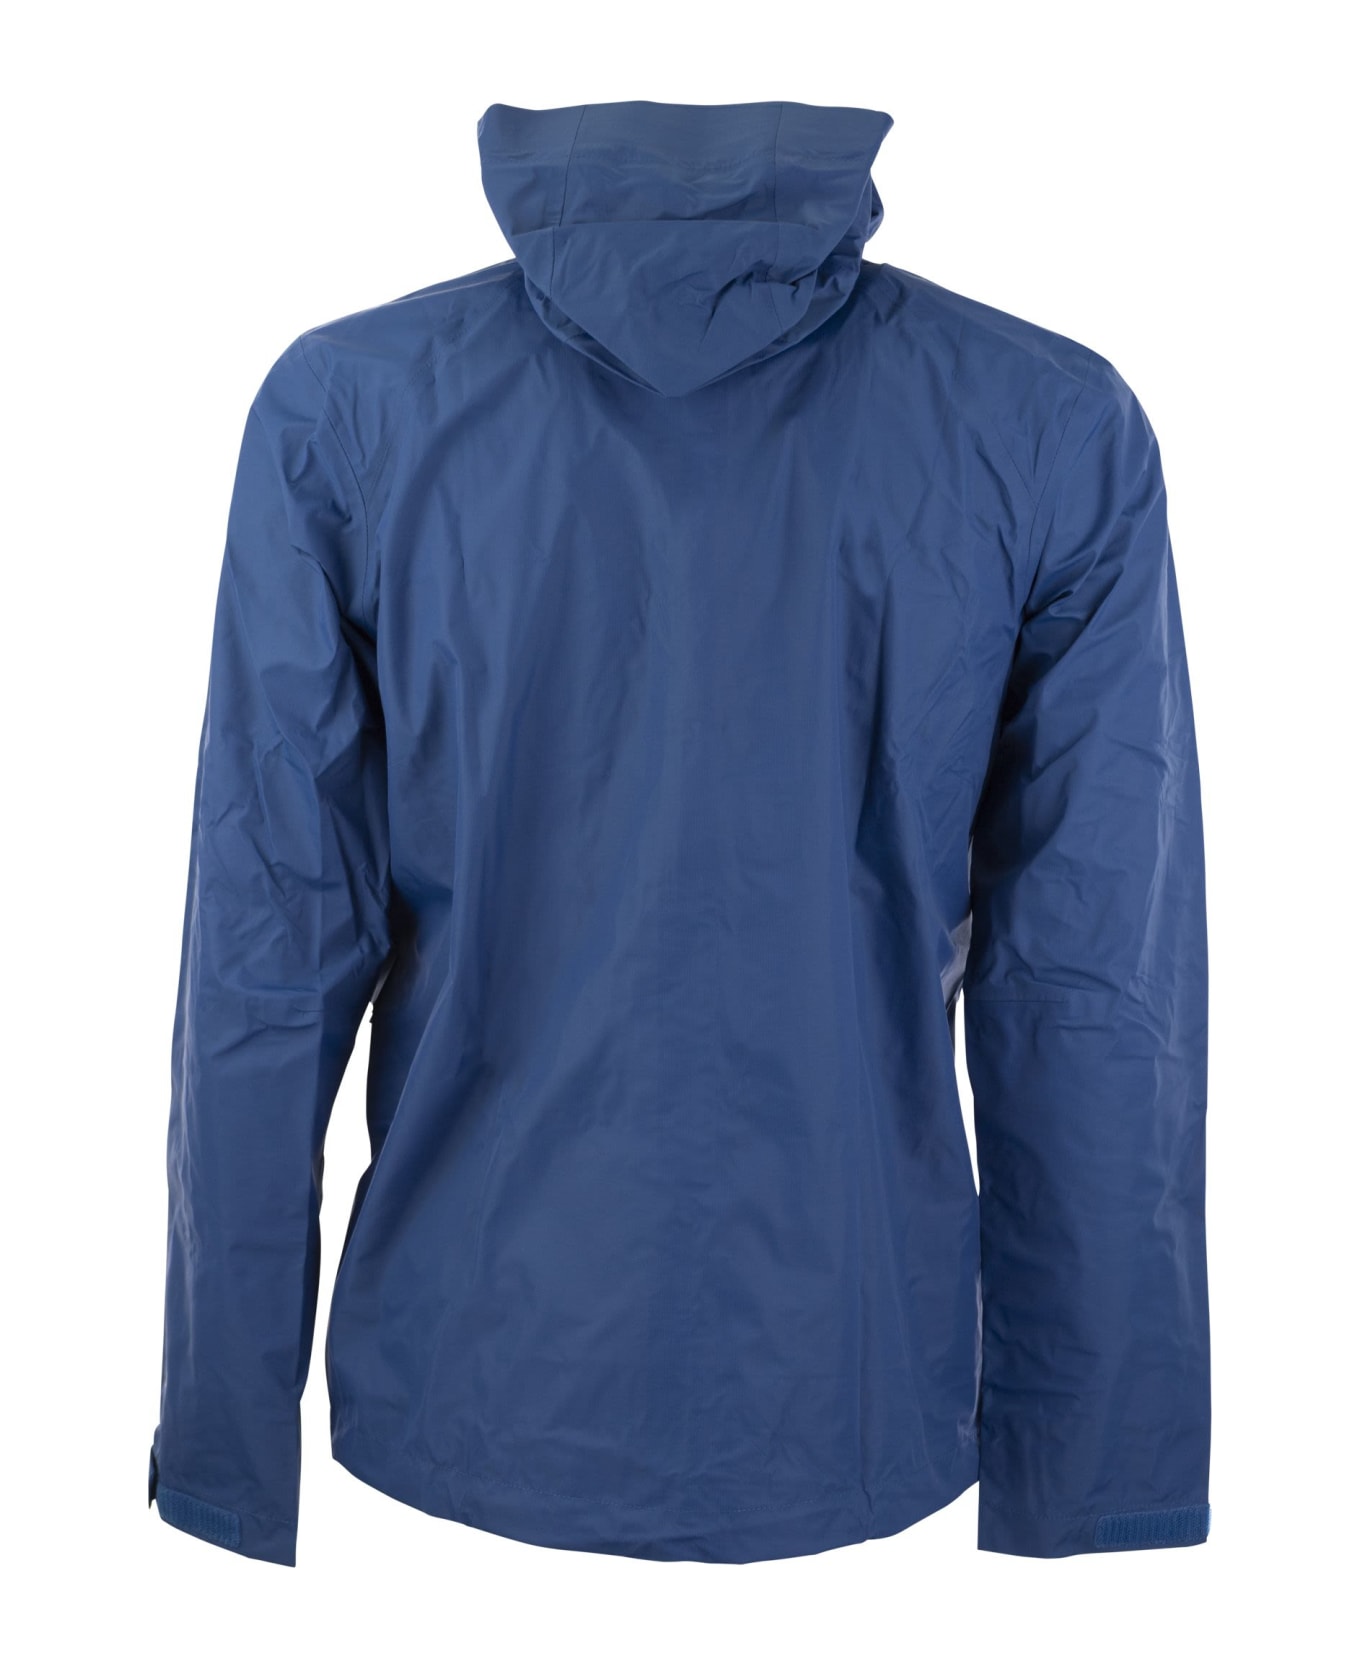 Patagonia Nylon Rainproof Jacket - Blue ジャケット